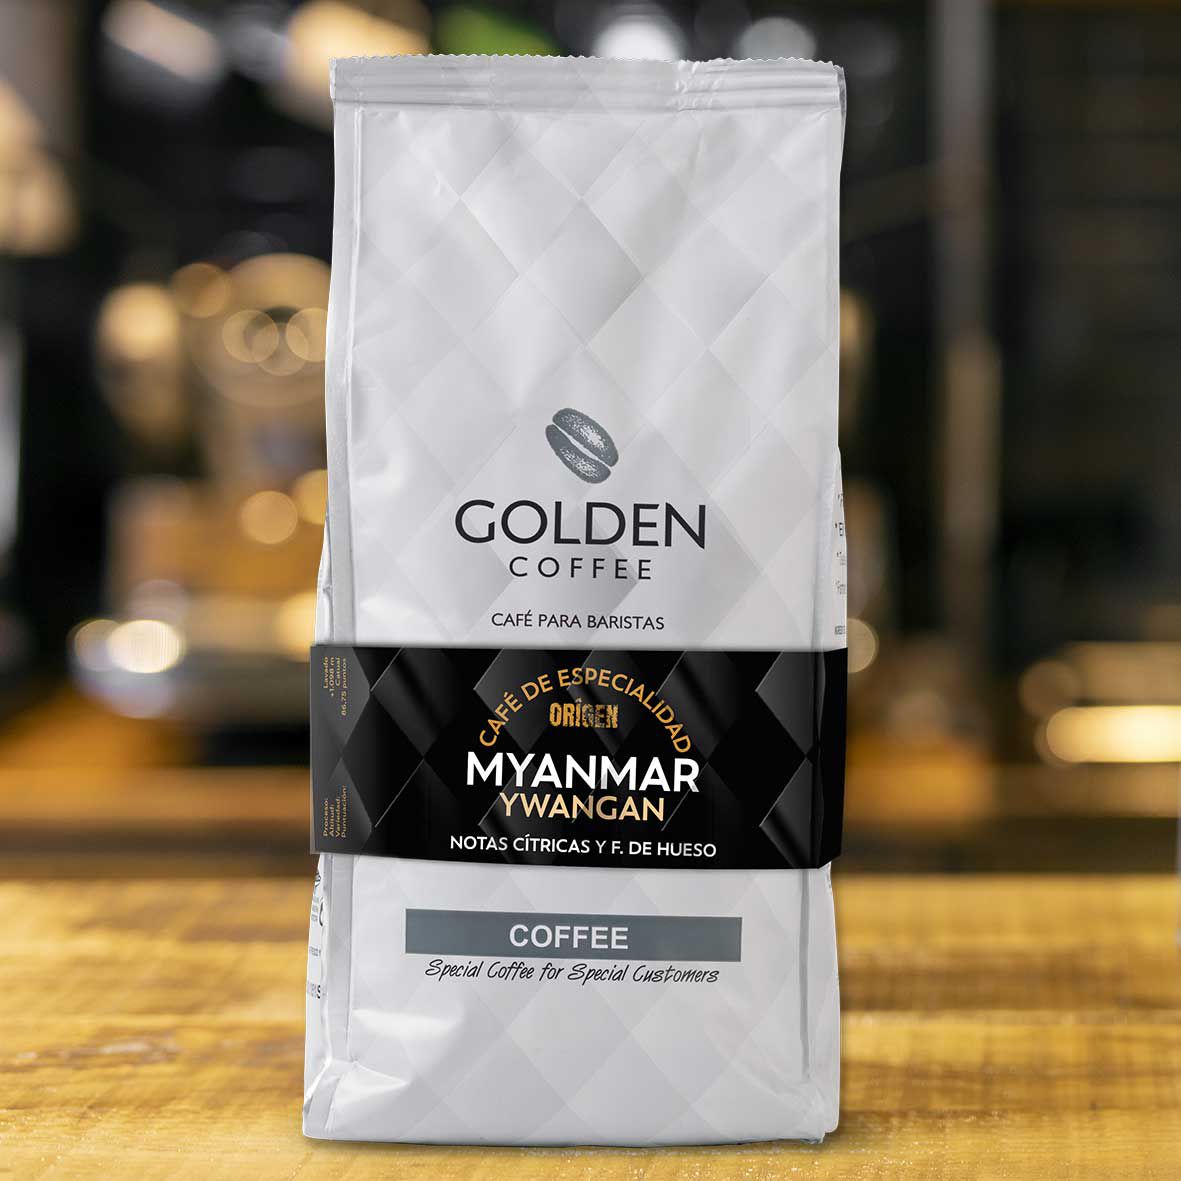 Café origen Myanmar Ywangan